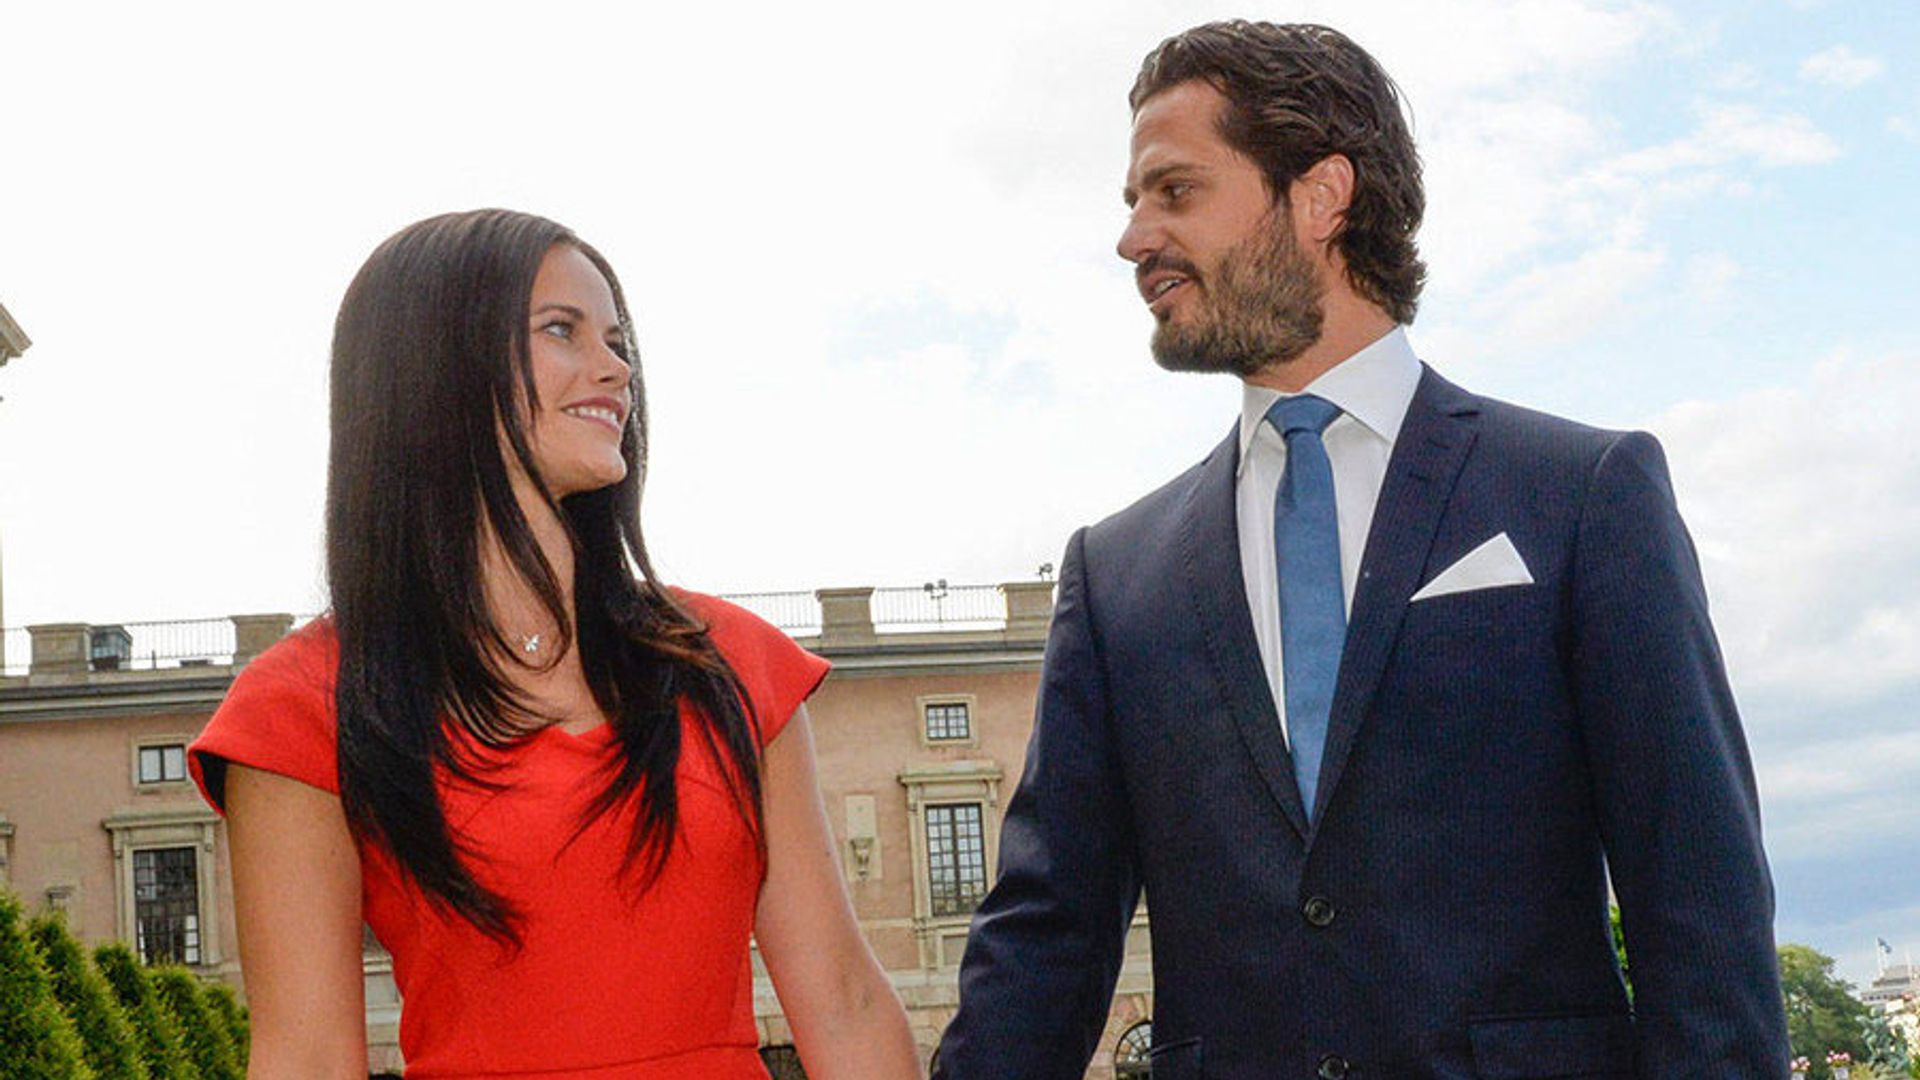 Prince Carl Philip, Sofia Hellqvist talk love at first sight and 'princess school'